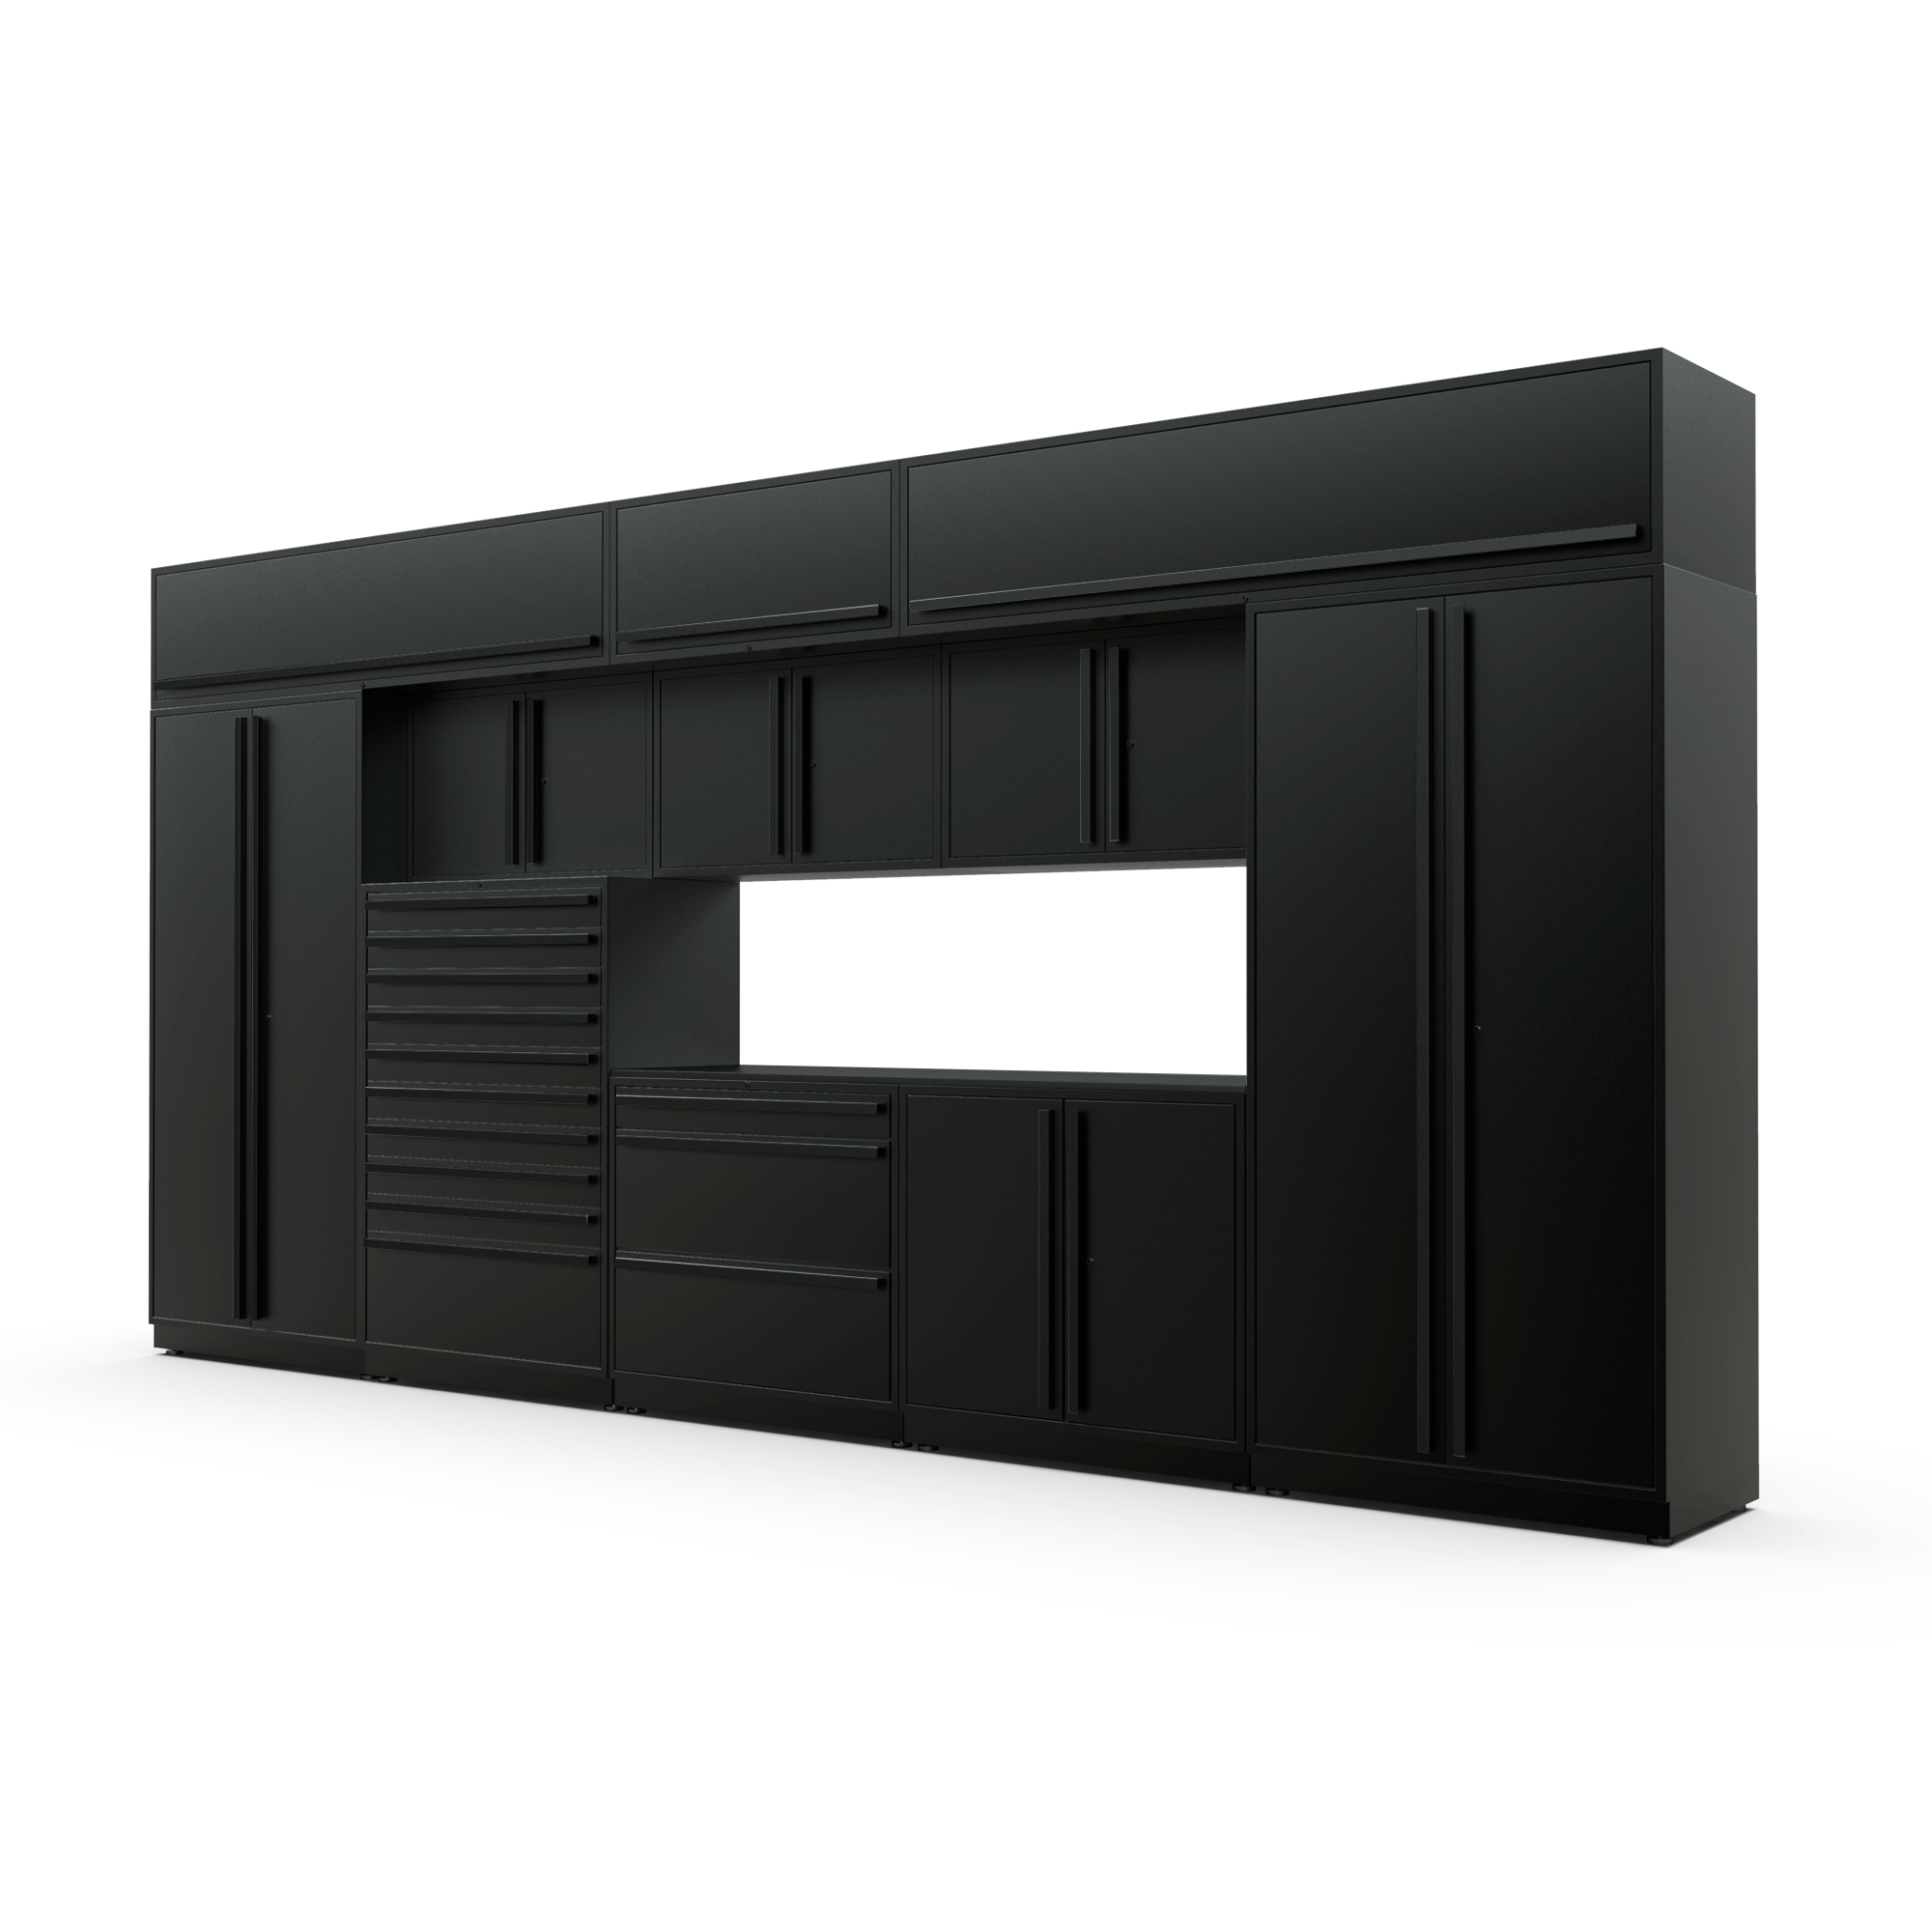 Large Clear Bin - Garage Storage Cabinets, Slatwall